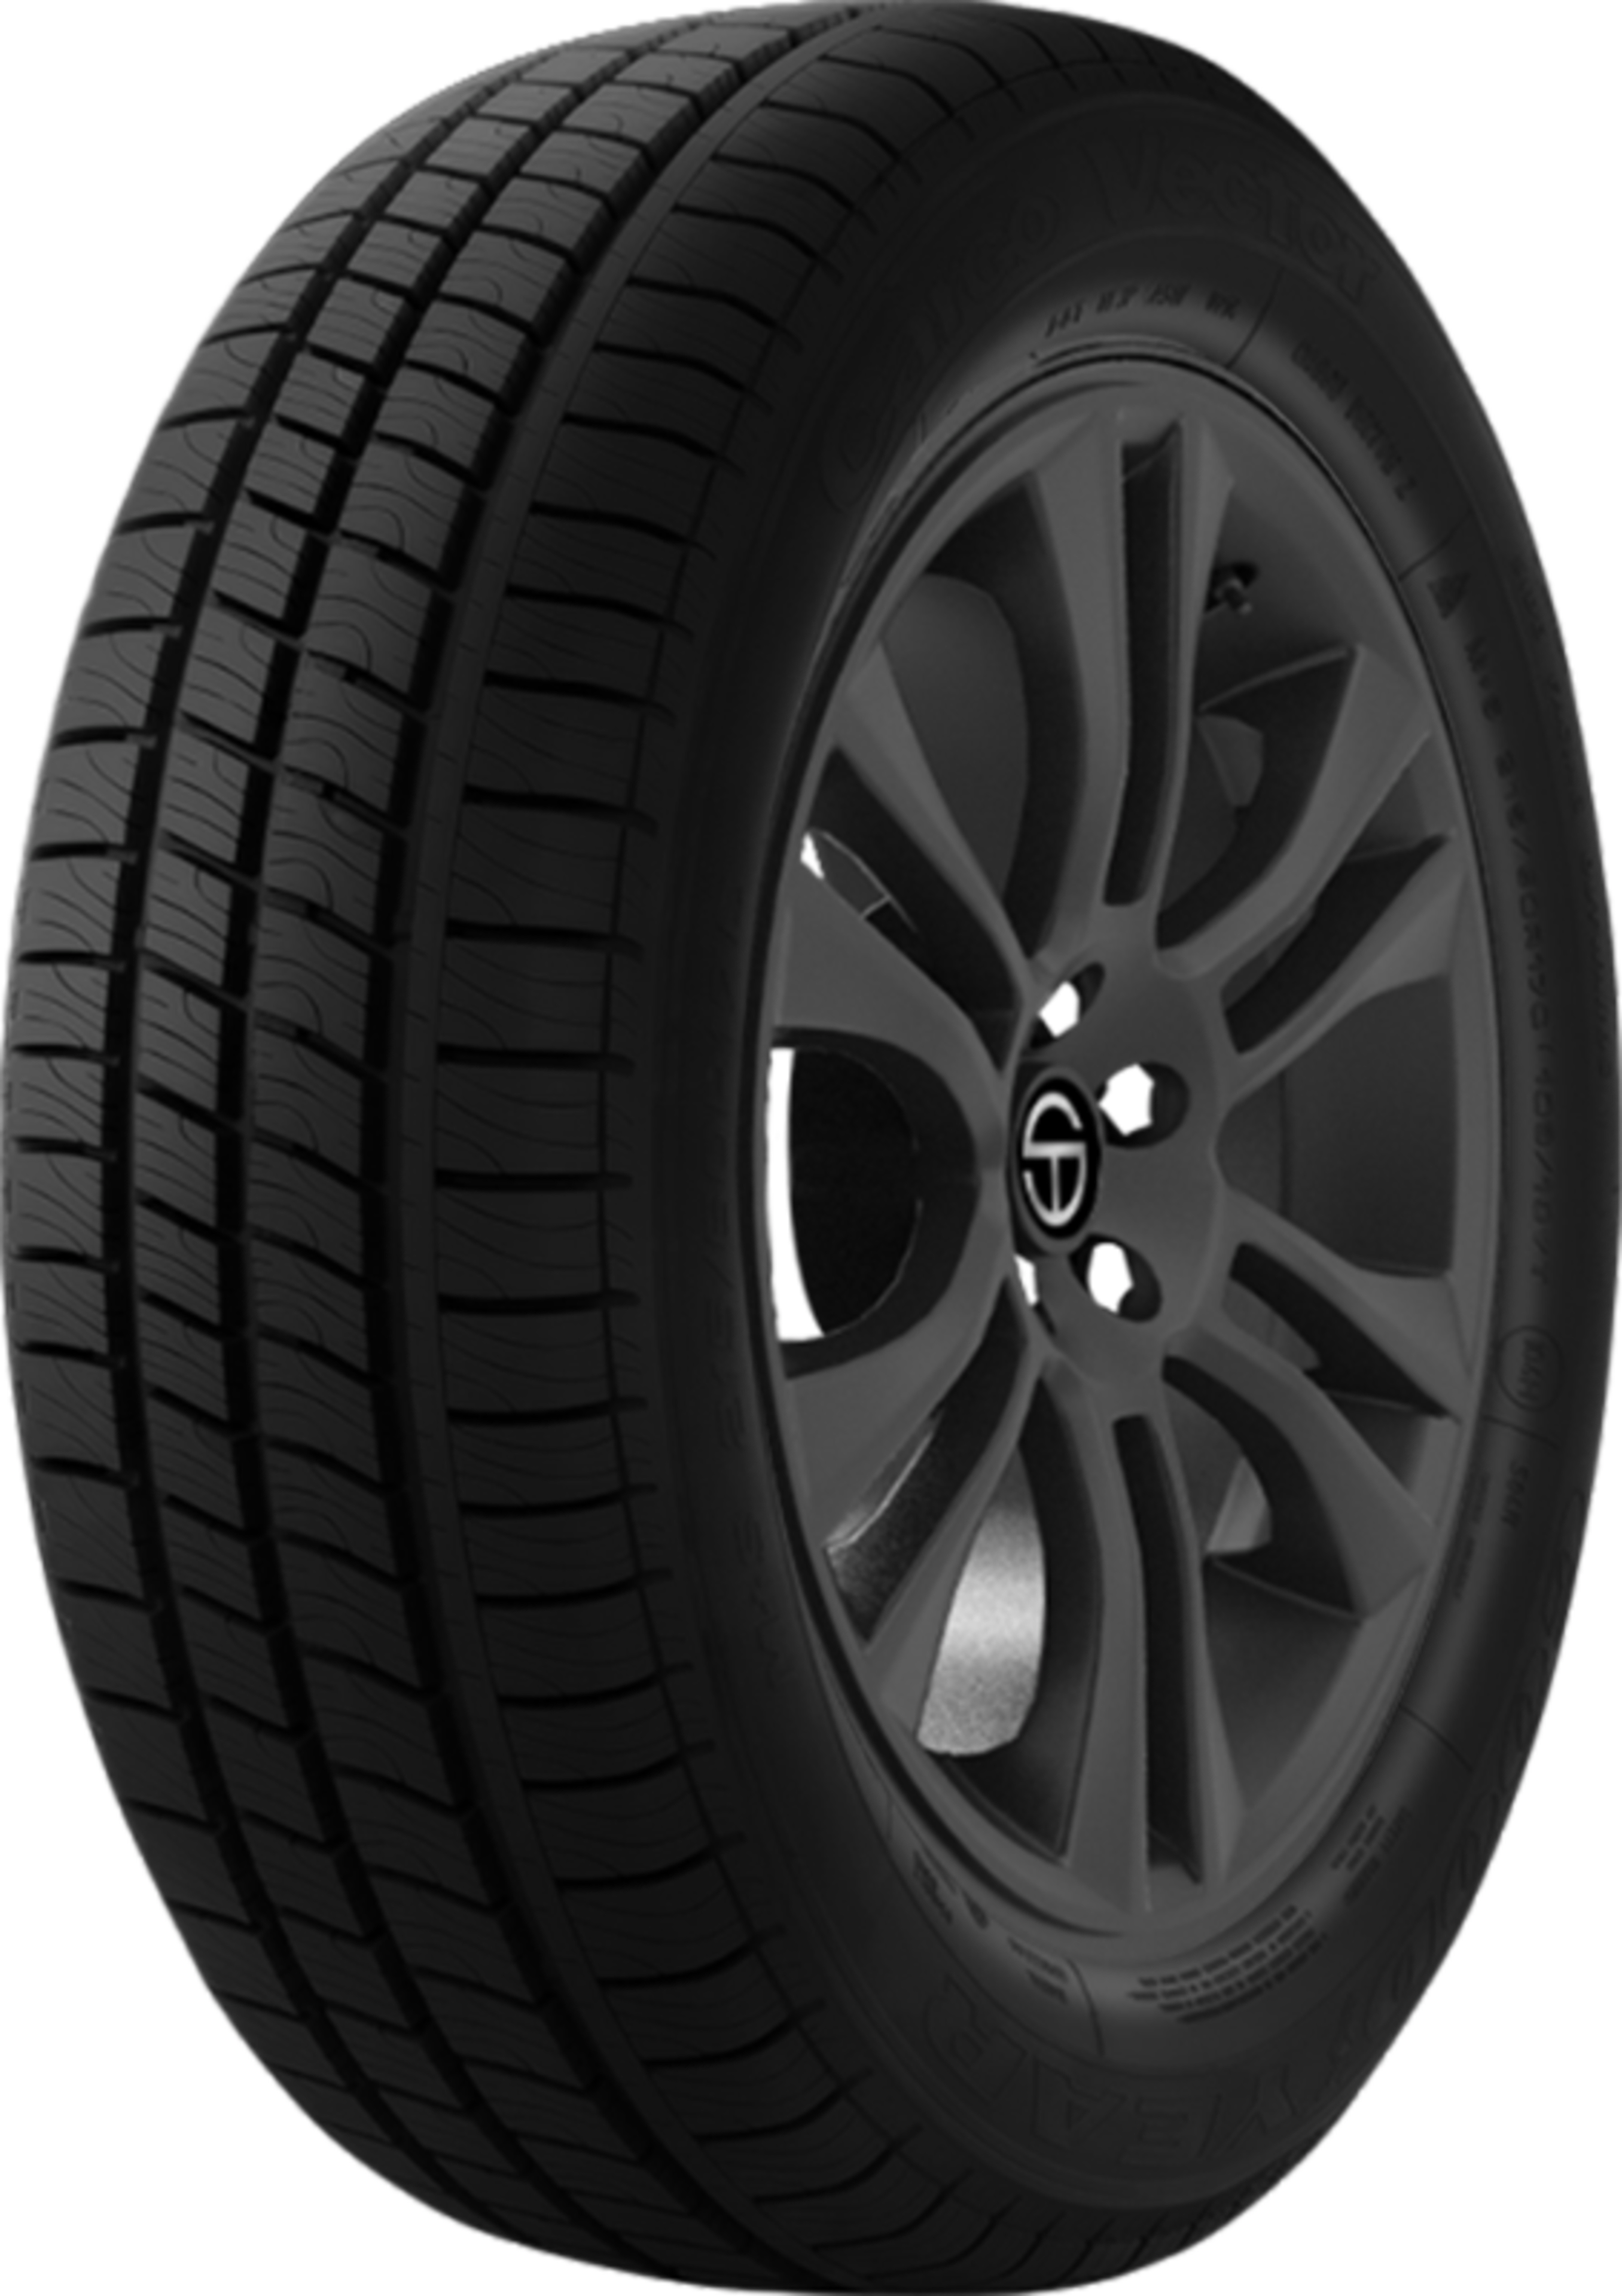 Buy Goodyear Cargo Vector Tires Online SimpleTire 2 